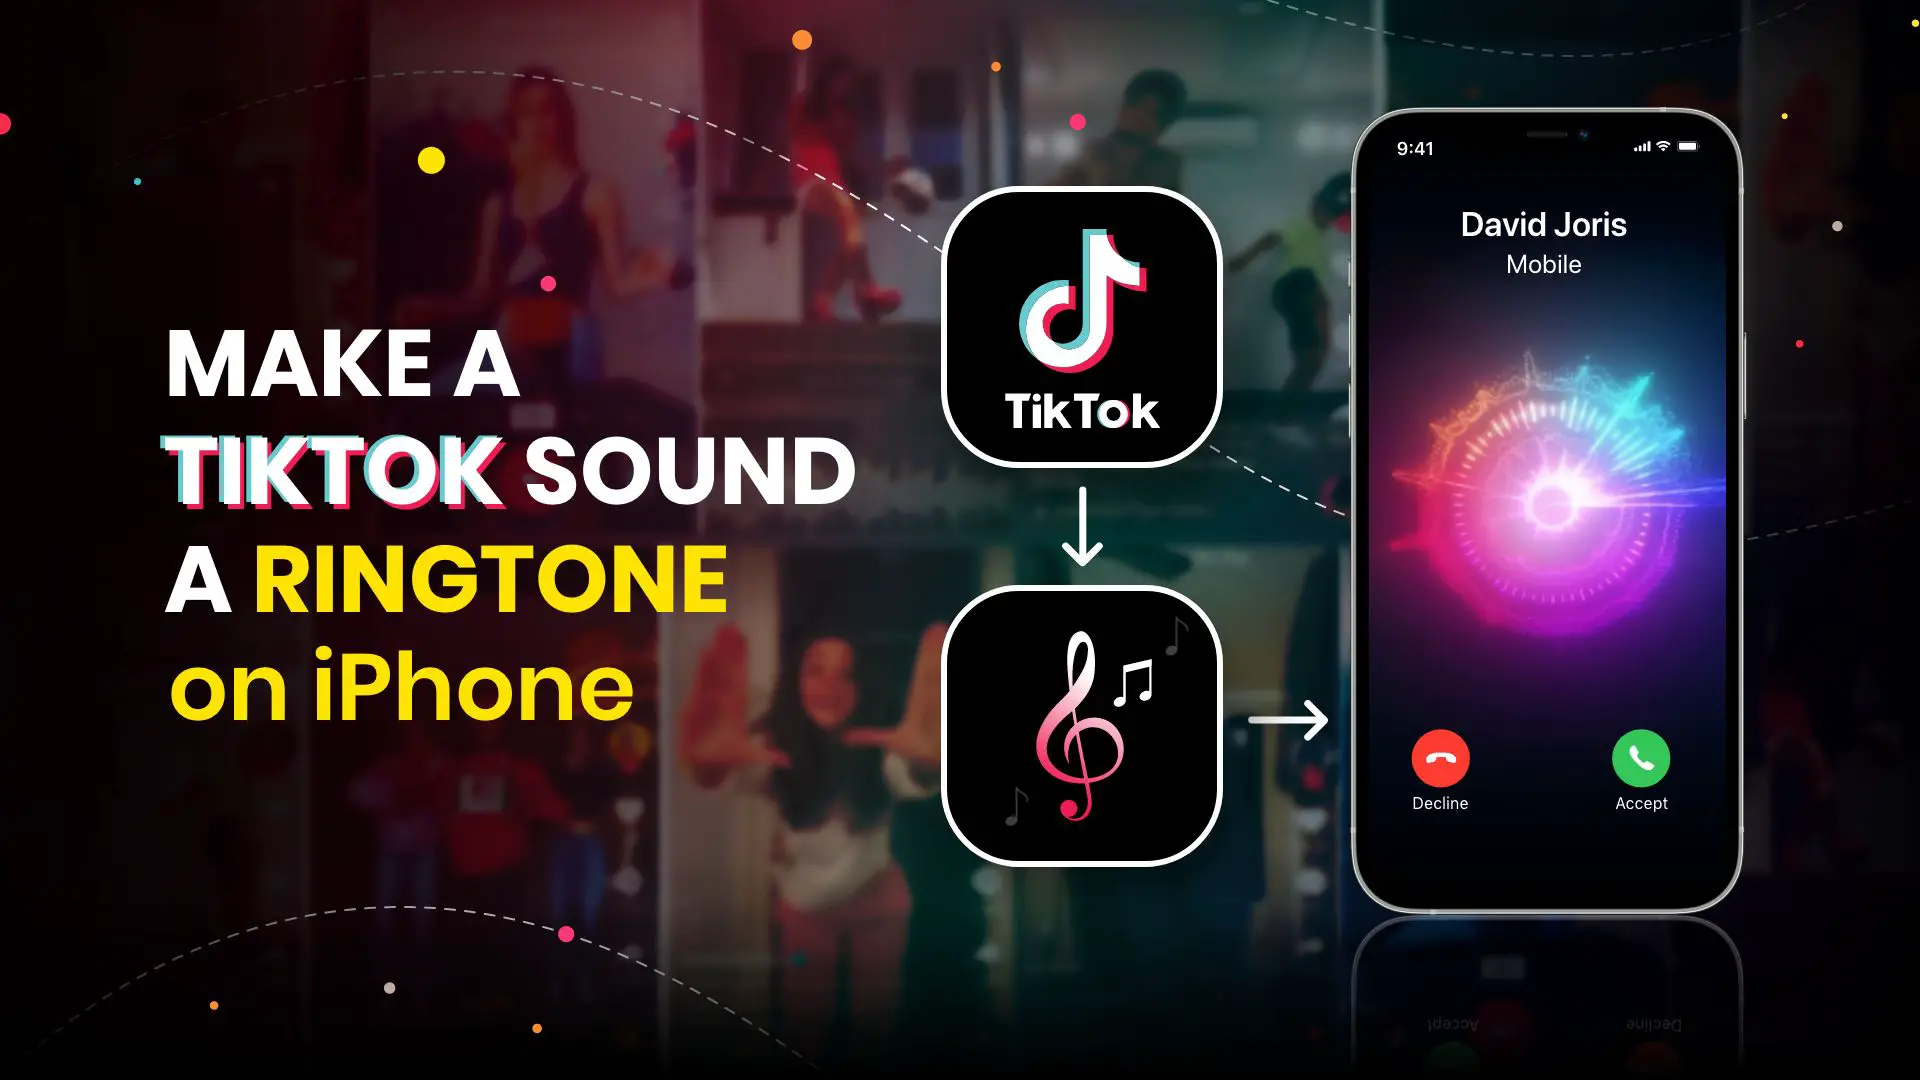 How to Make a TikTok Sound a Ringtone on iPhone